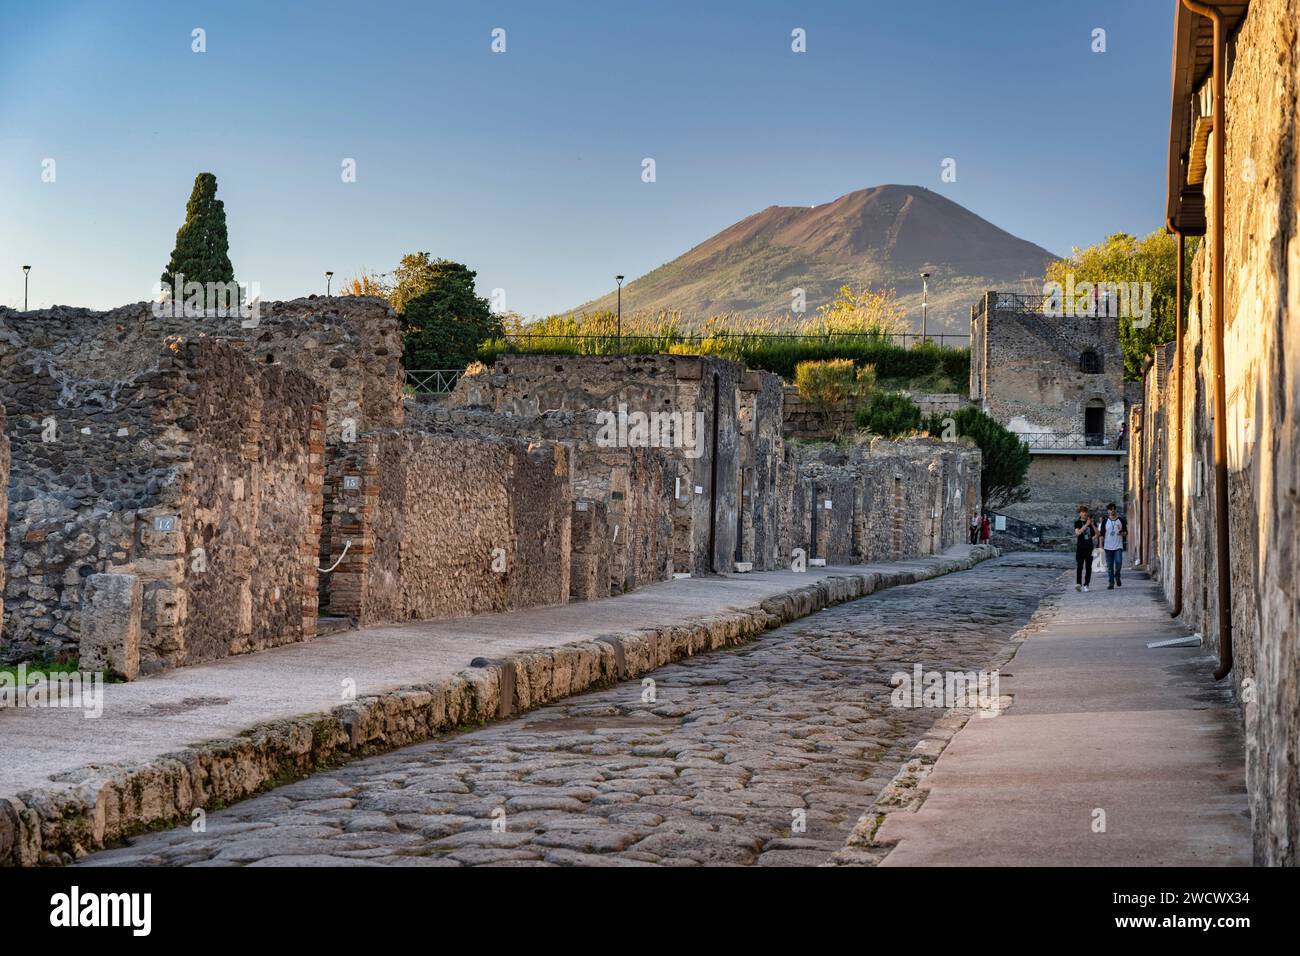 Italy, Campania, the Bay of Naples, Pompei, Vesuvius in the background Stock Photo